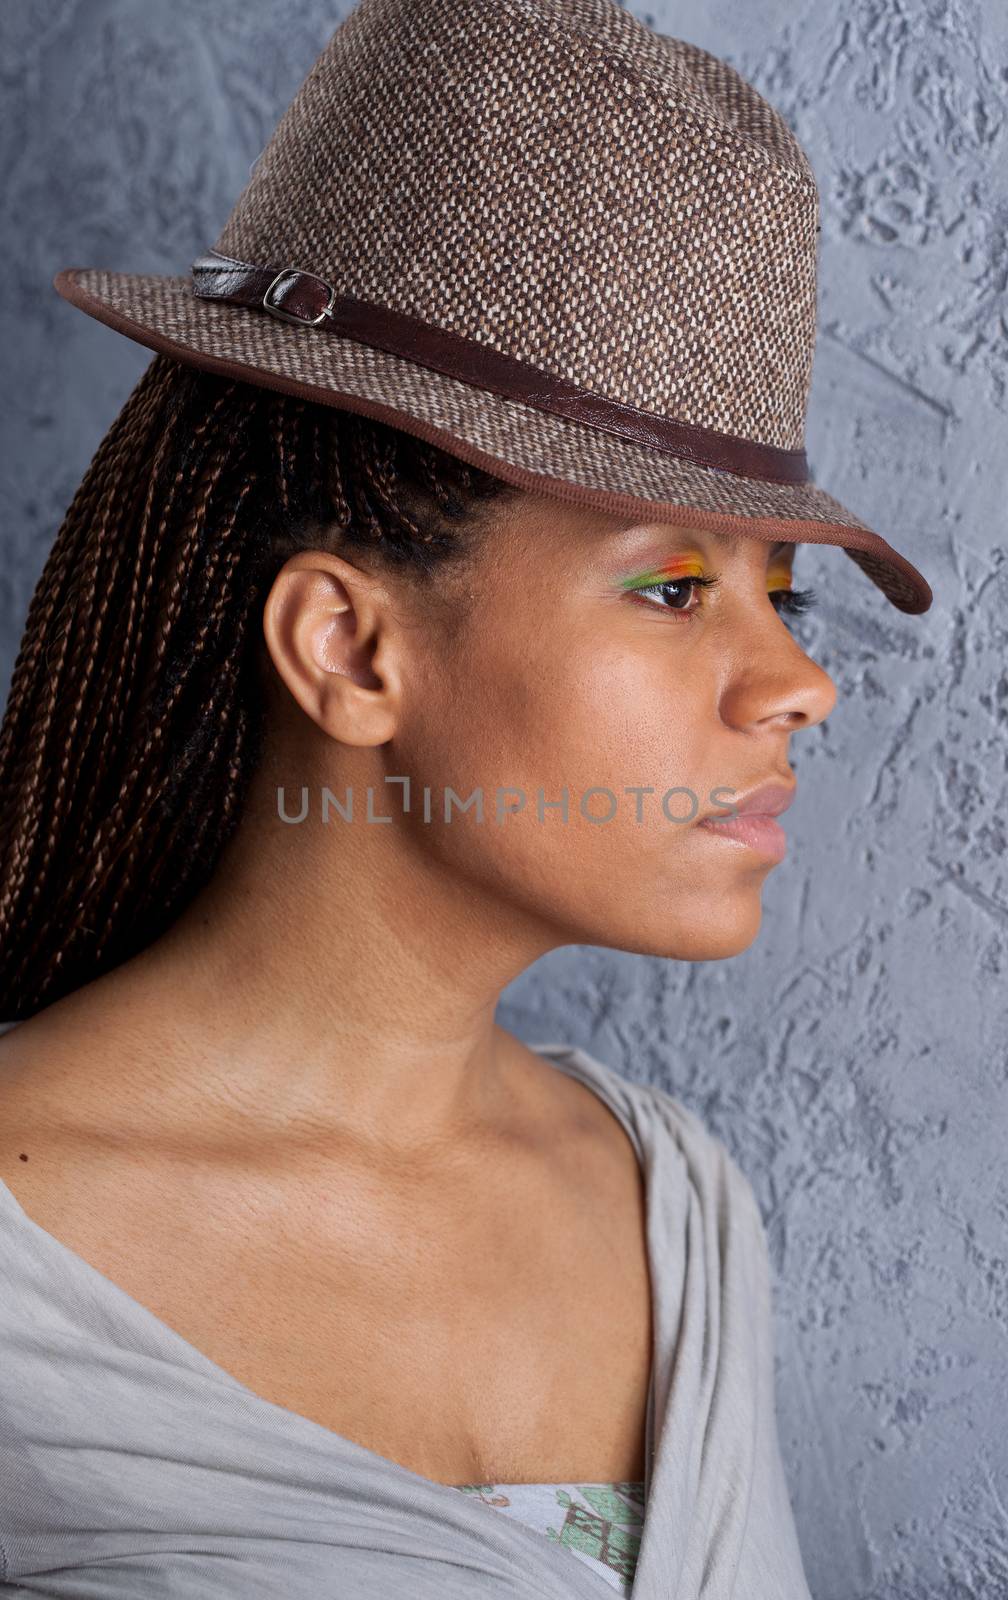 profile portrait of yong woman in a hat